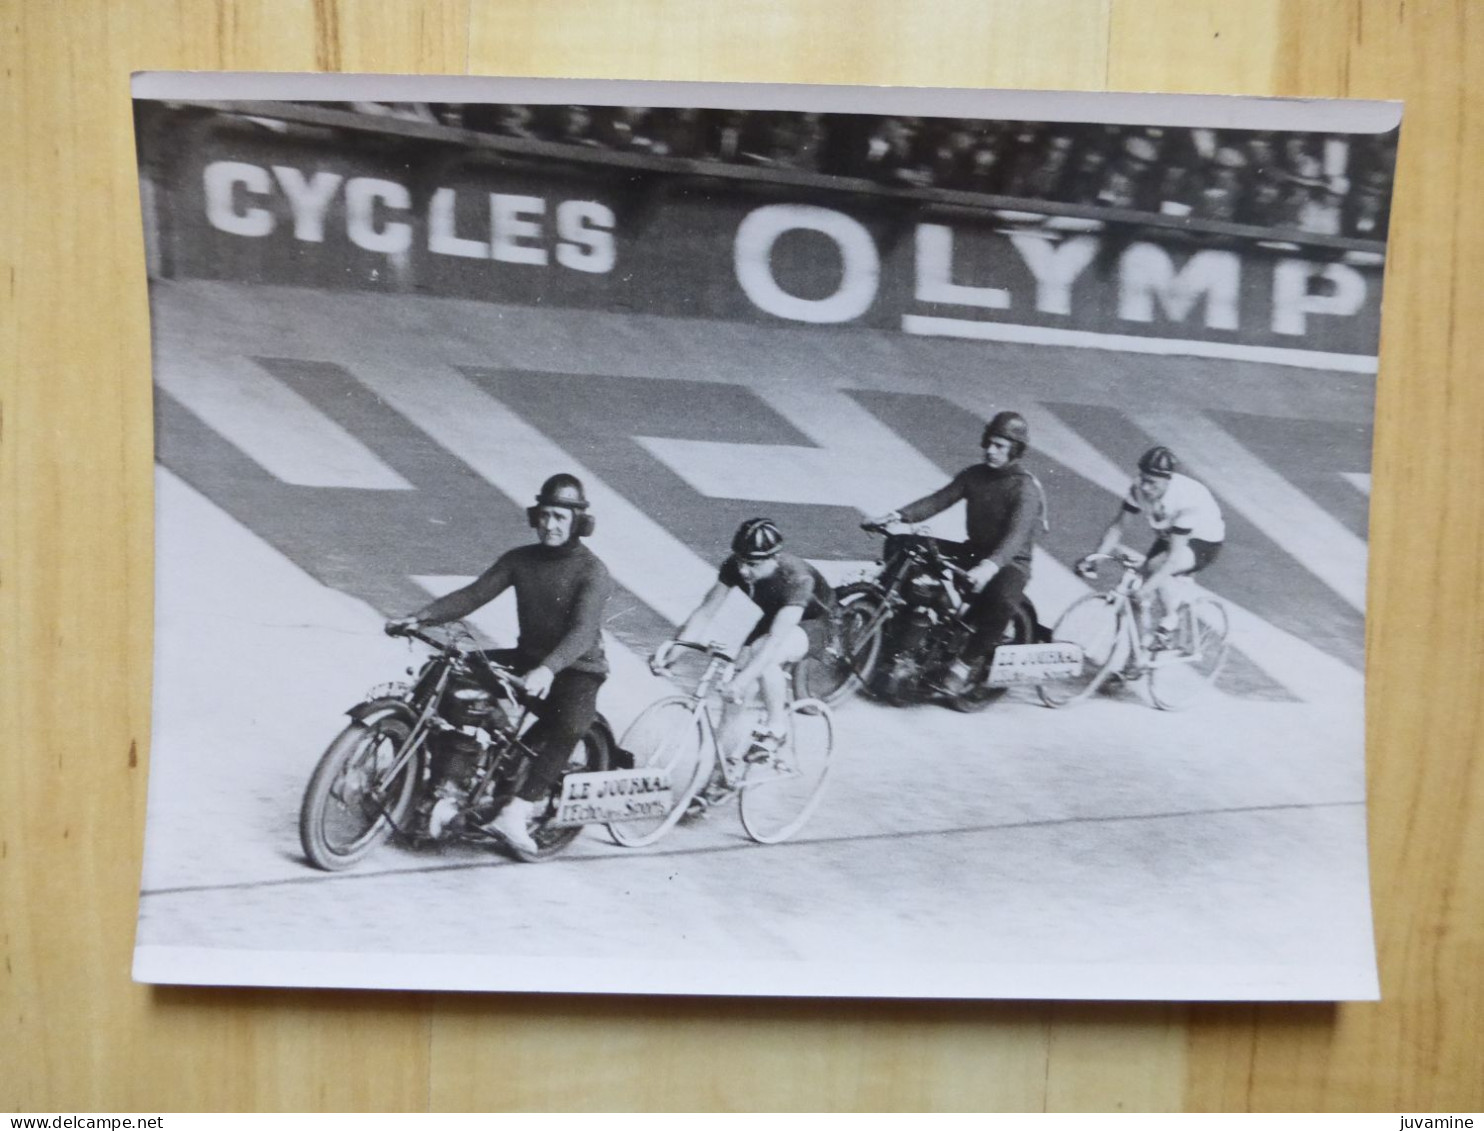 STADE BUFFALO 1934  - SELECTION CRITERIUM DES AS - L'ALLEMAND EHMER DOUBLE FAUDET - PHOTOGRAPHIE CYCLISME CYCLISTE SPORT - Cyclisme